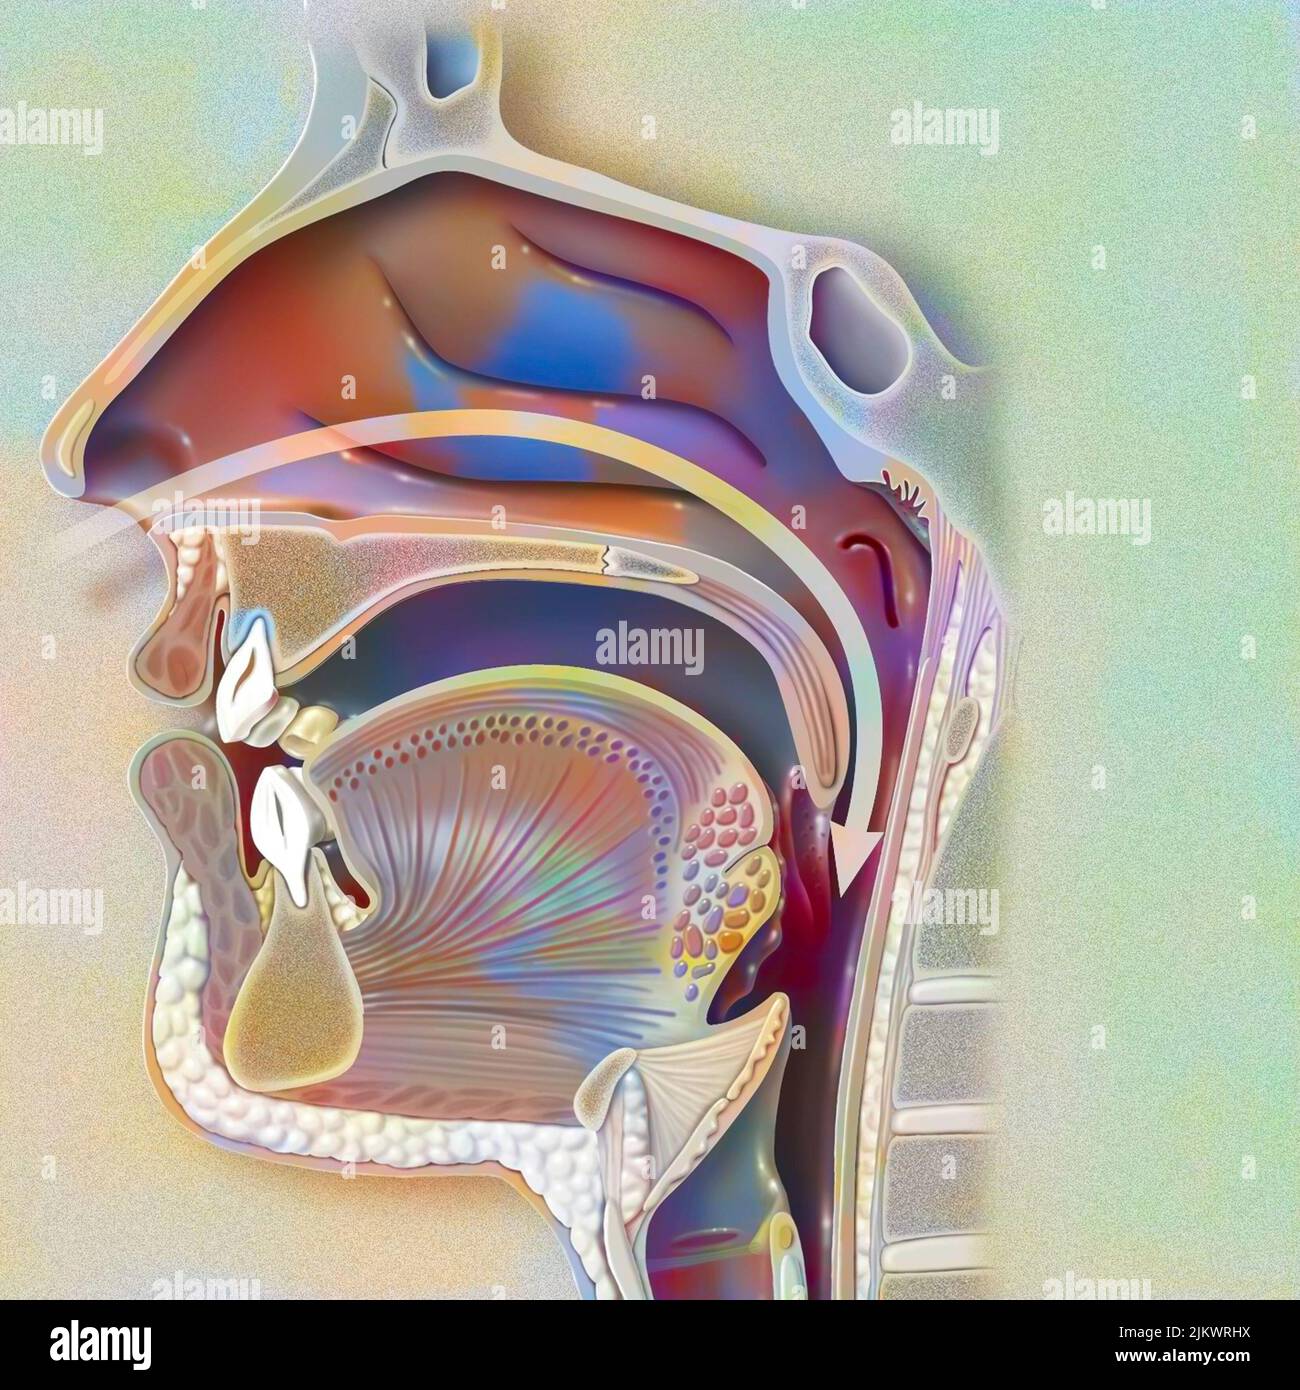 Airways (nasopharynx) revealing the nasal cavity, the pharyngeal wall and the uvula. Stock Photo